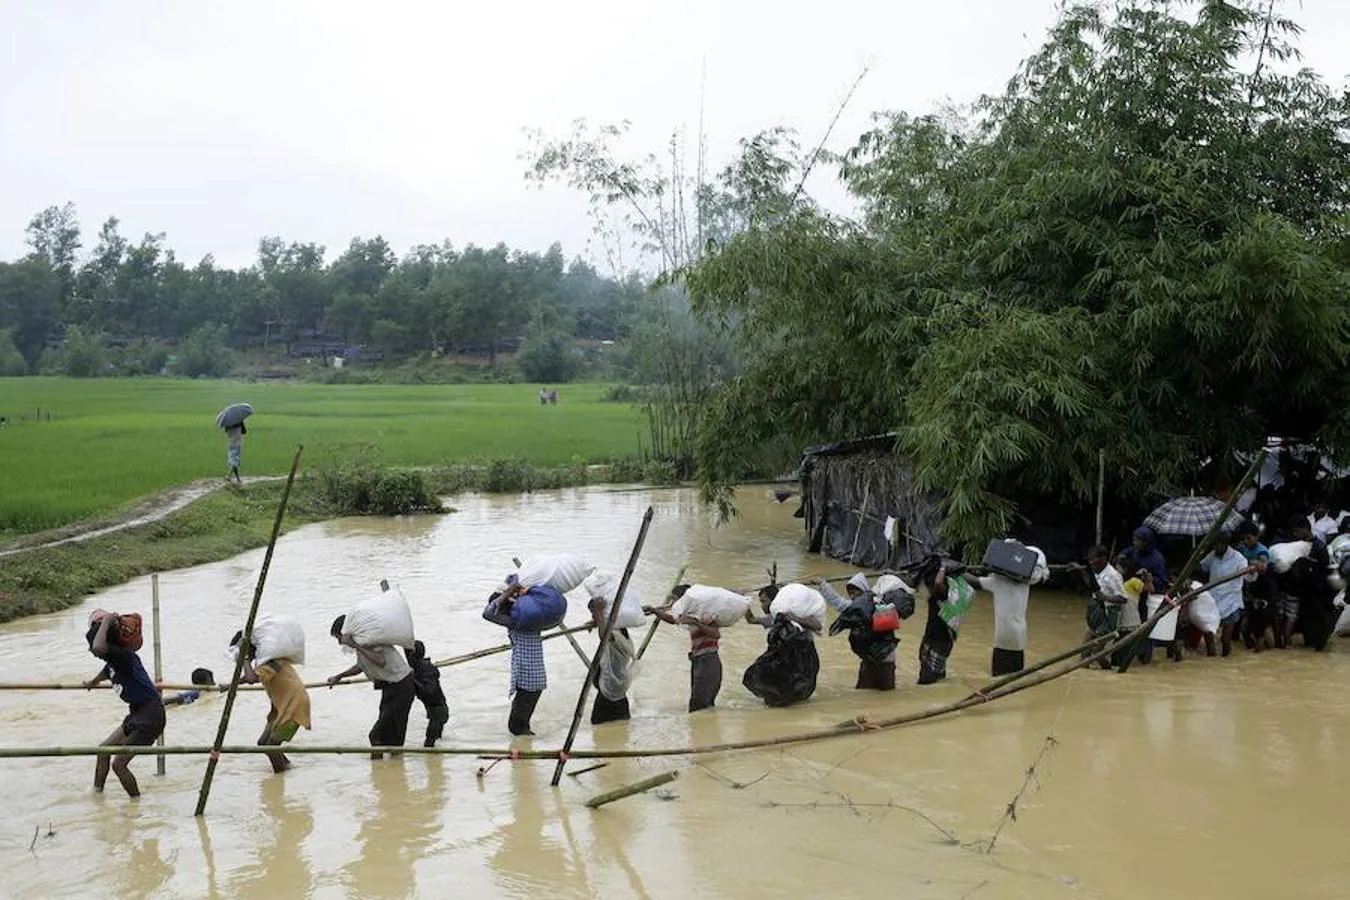 Refugiados rohingyas, pertrechados con sus pertenencias, cruzan un canal por un puente hecho con cañas de bambú en Bangladesh.. 